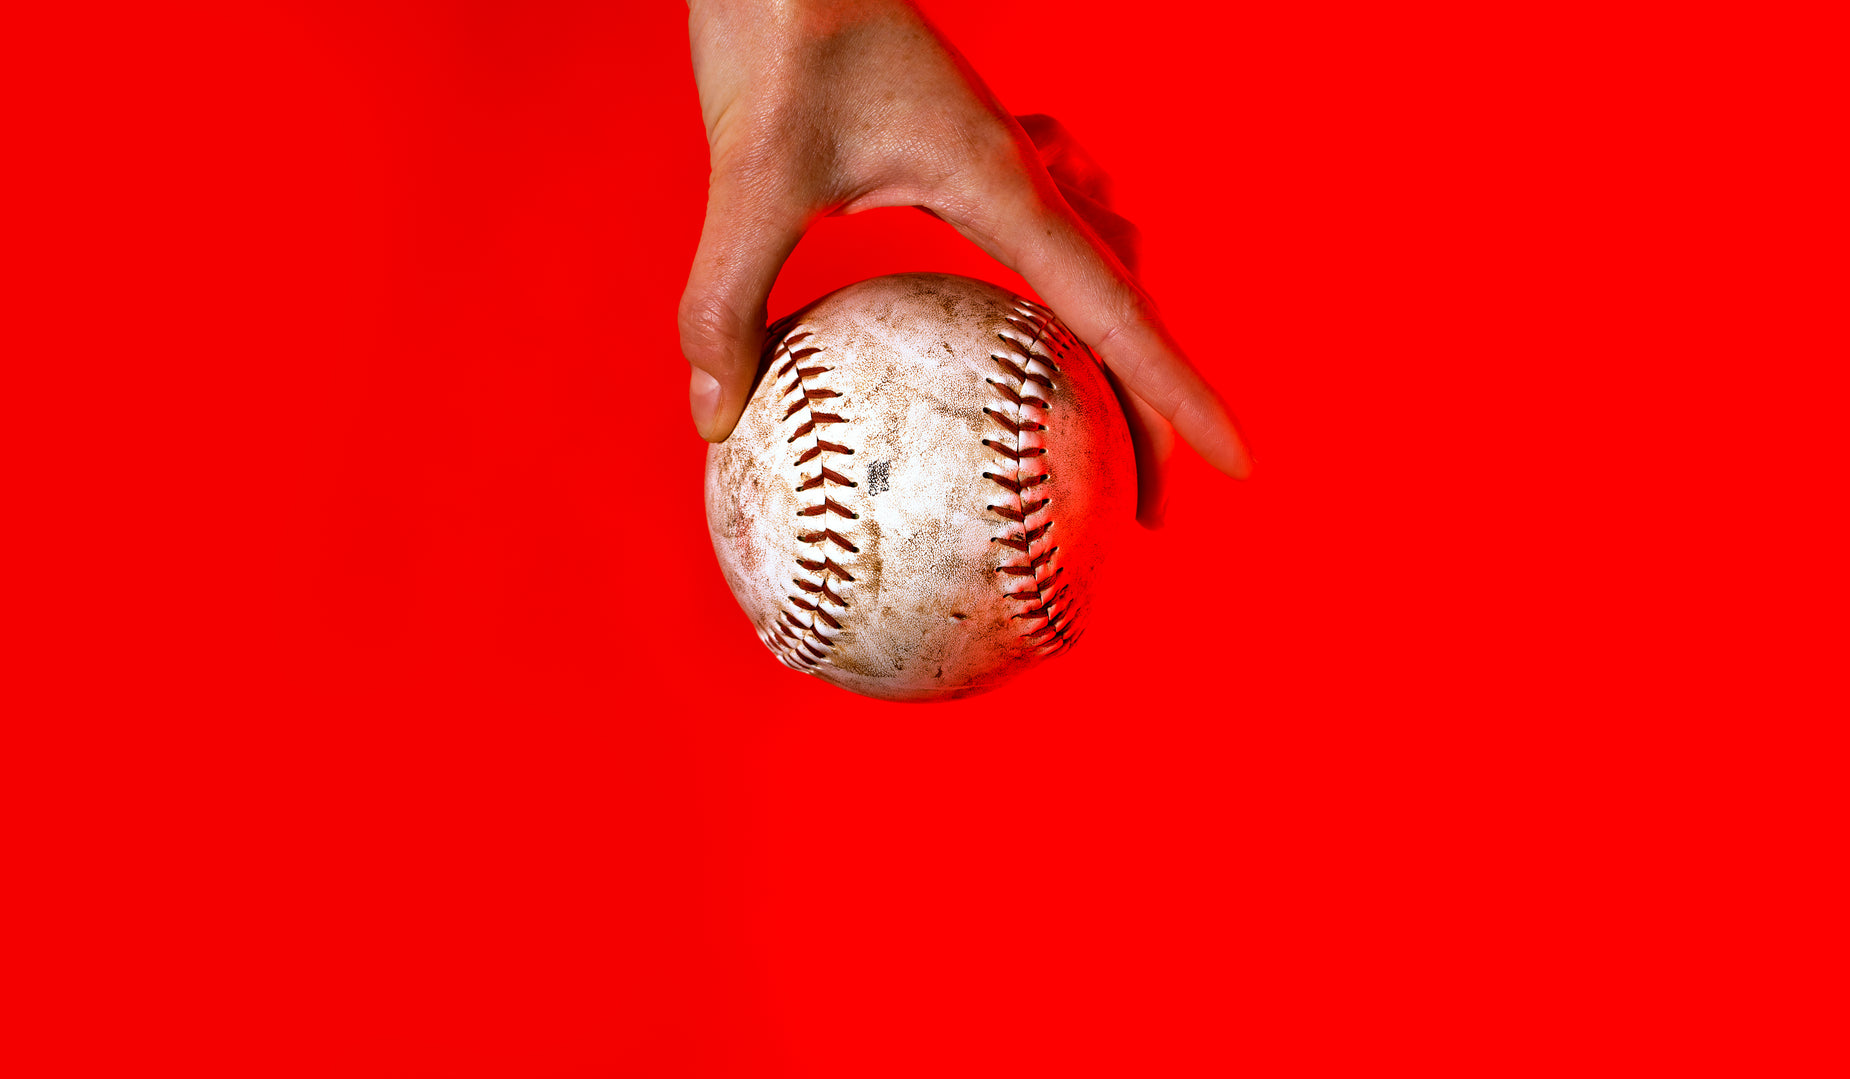 a person's hand reaching out toward a baseball